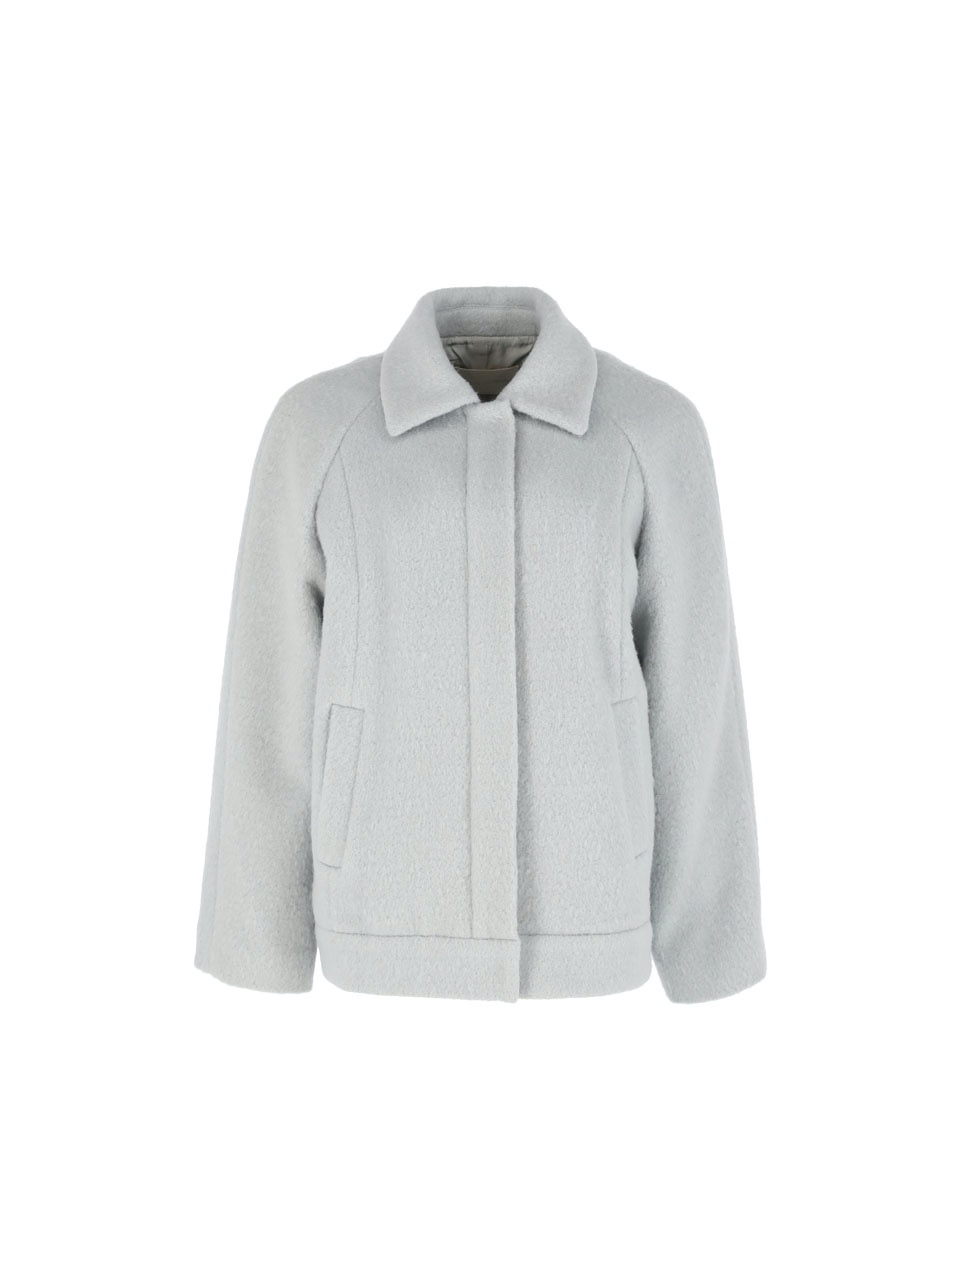 6W Soft wool blouson jumper (Light Grey)